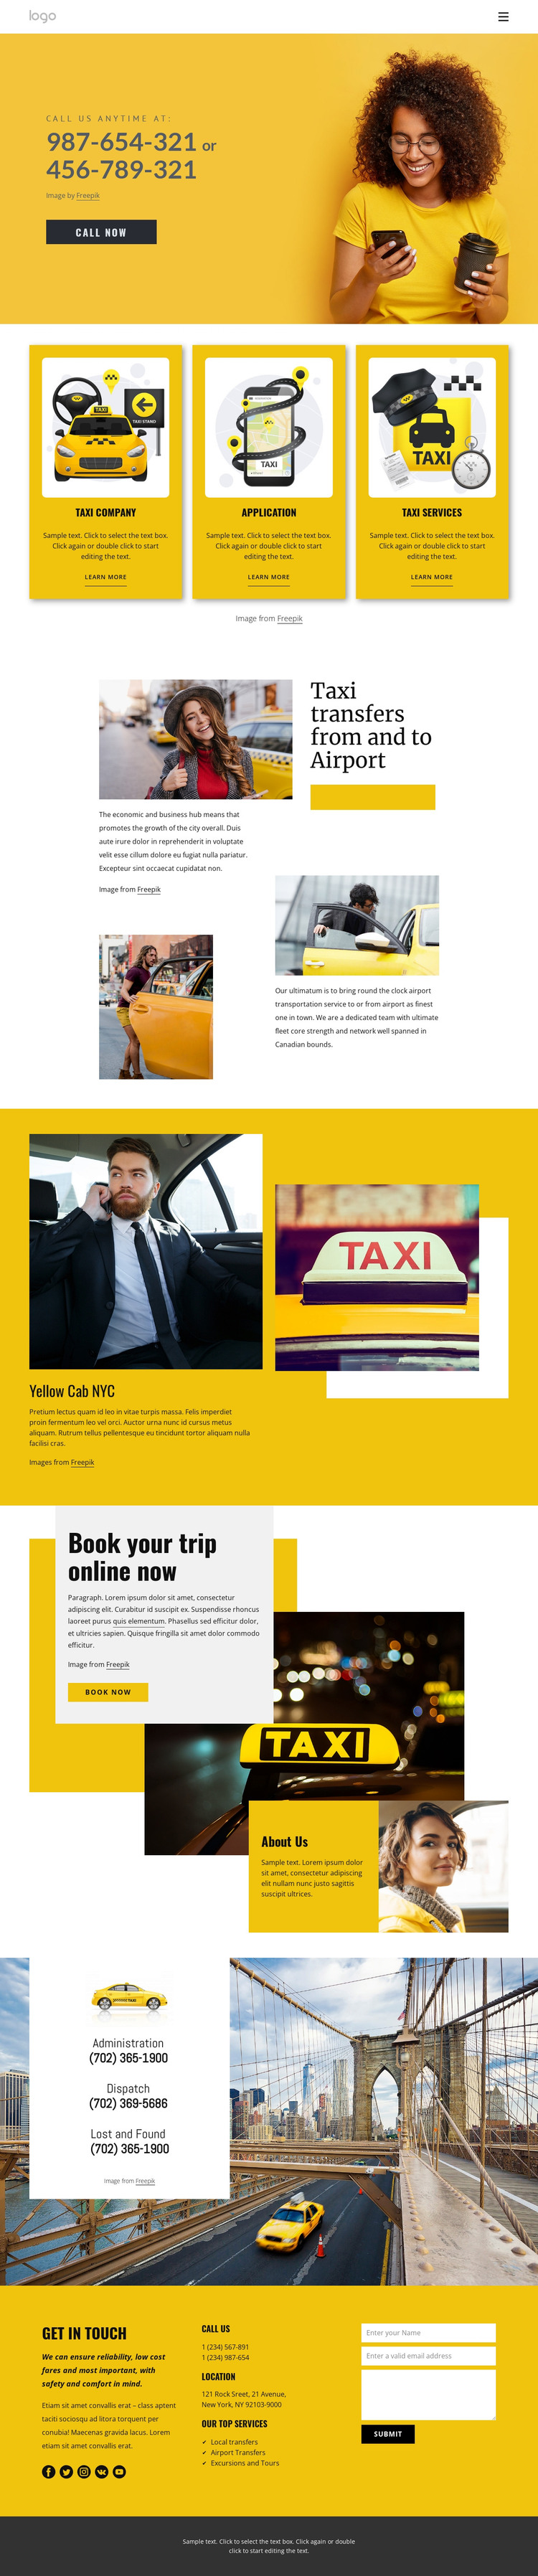 Quality taxi service Web Design